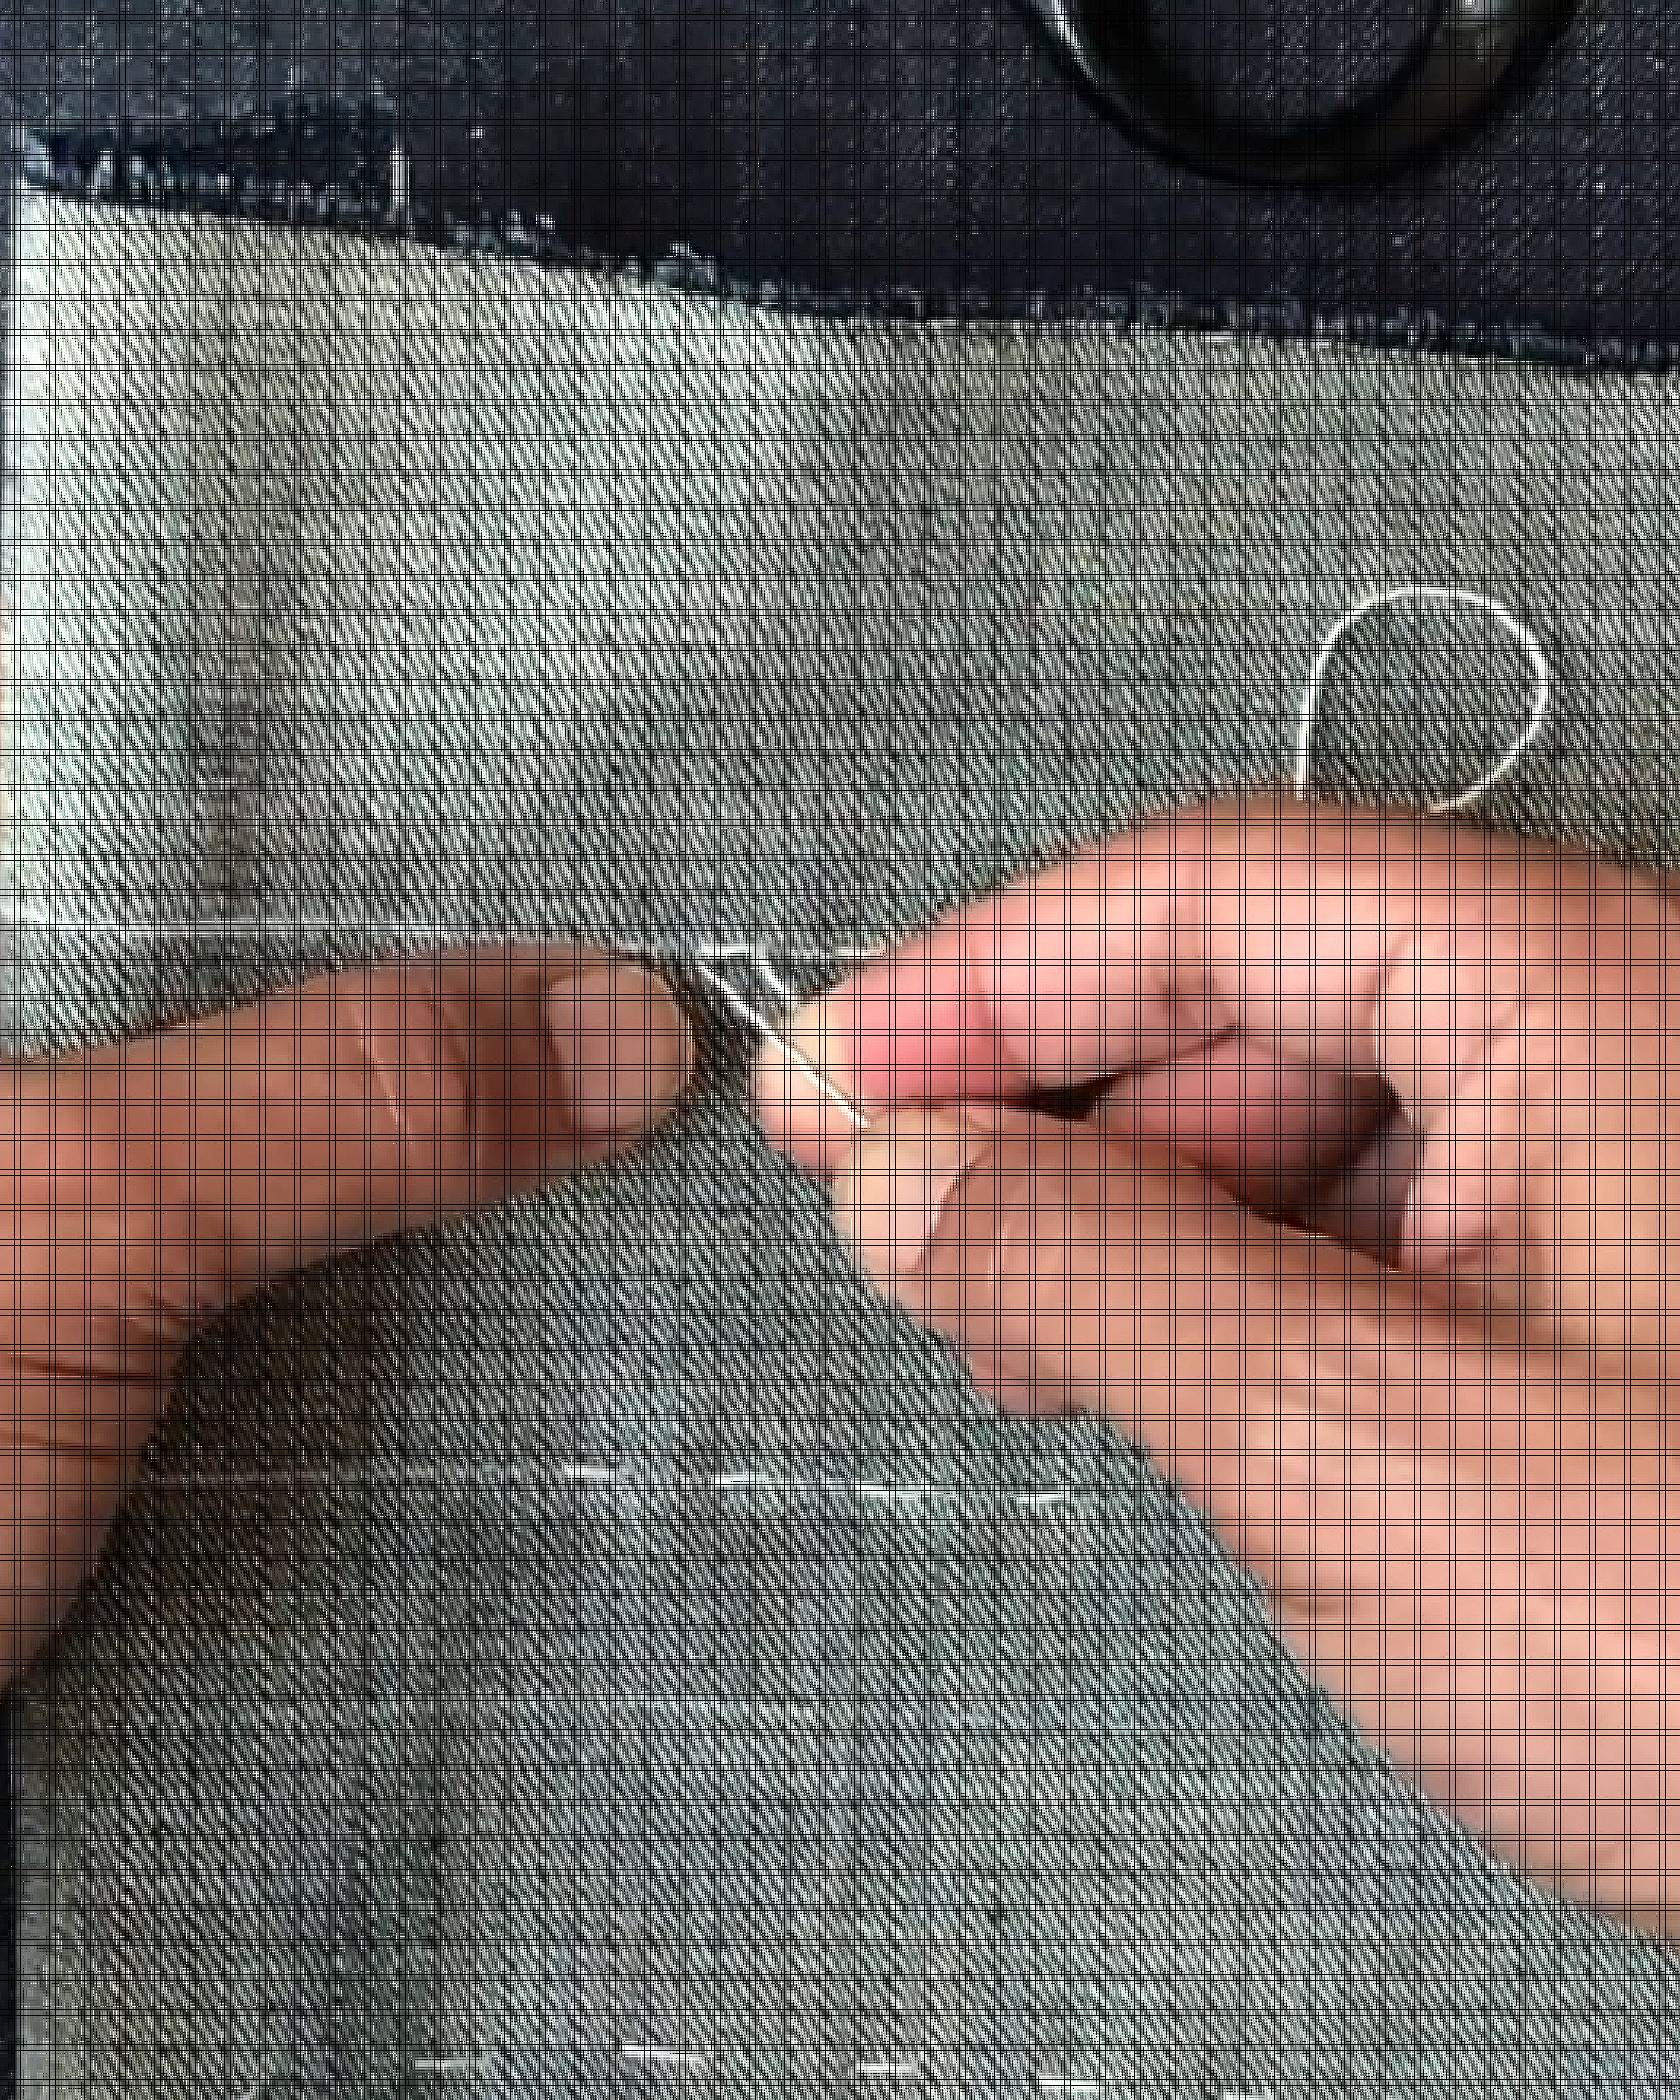 stitching denim jeans hands close up